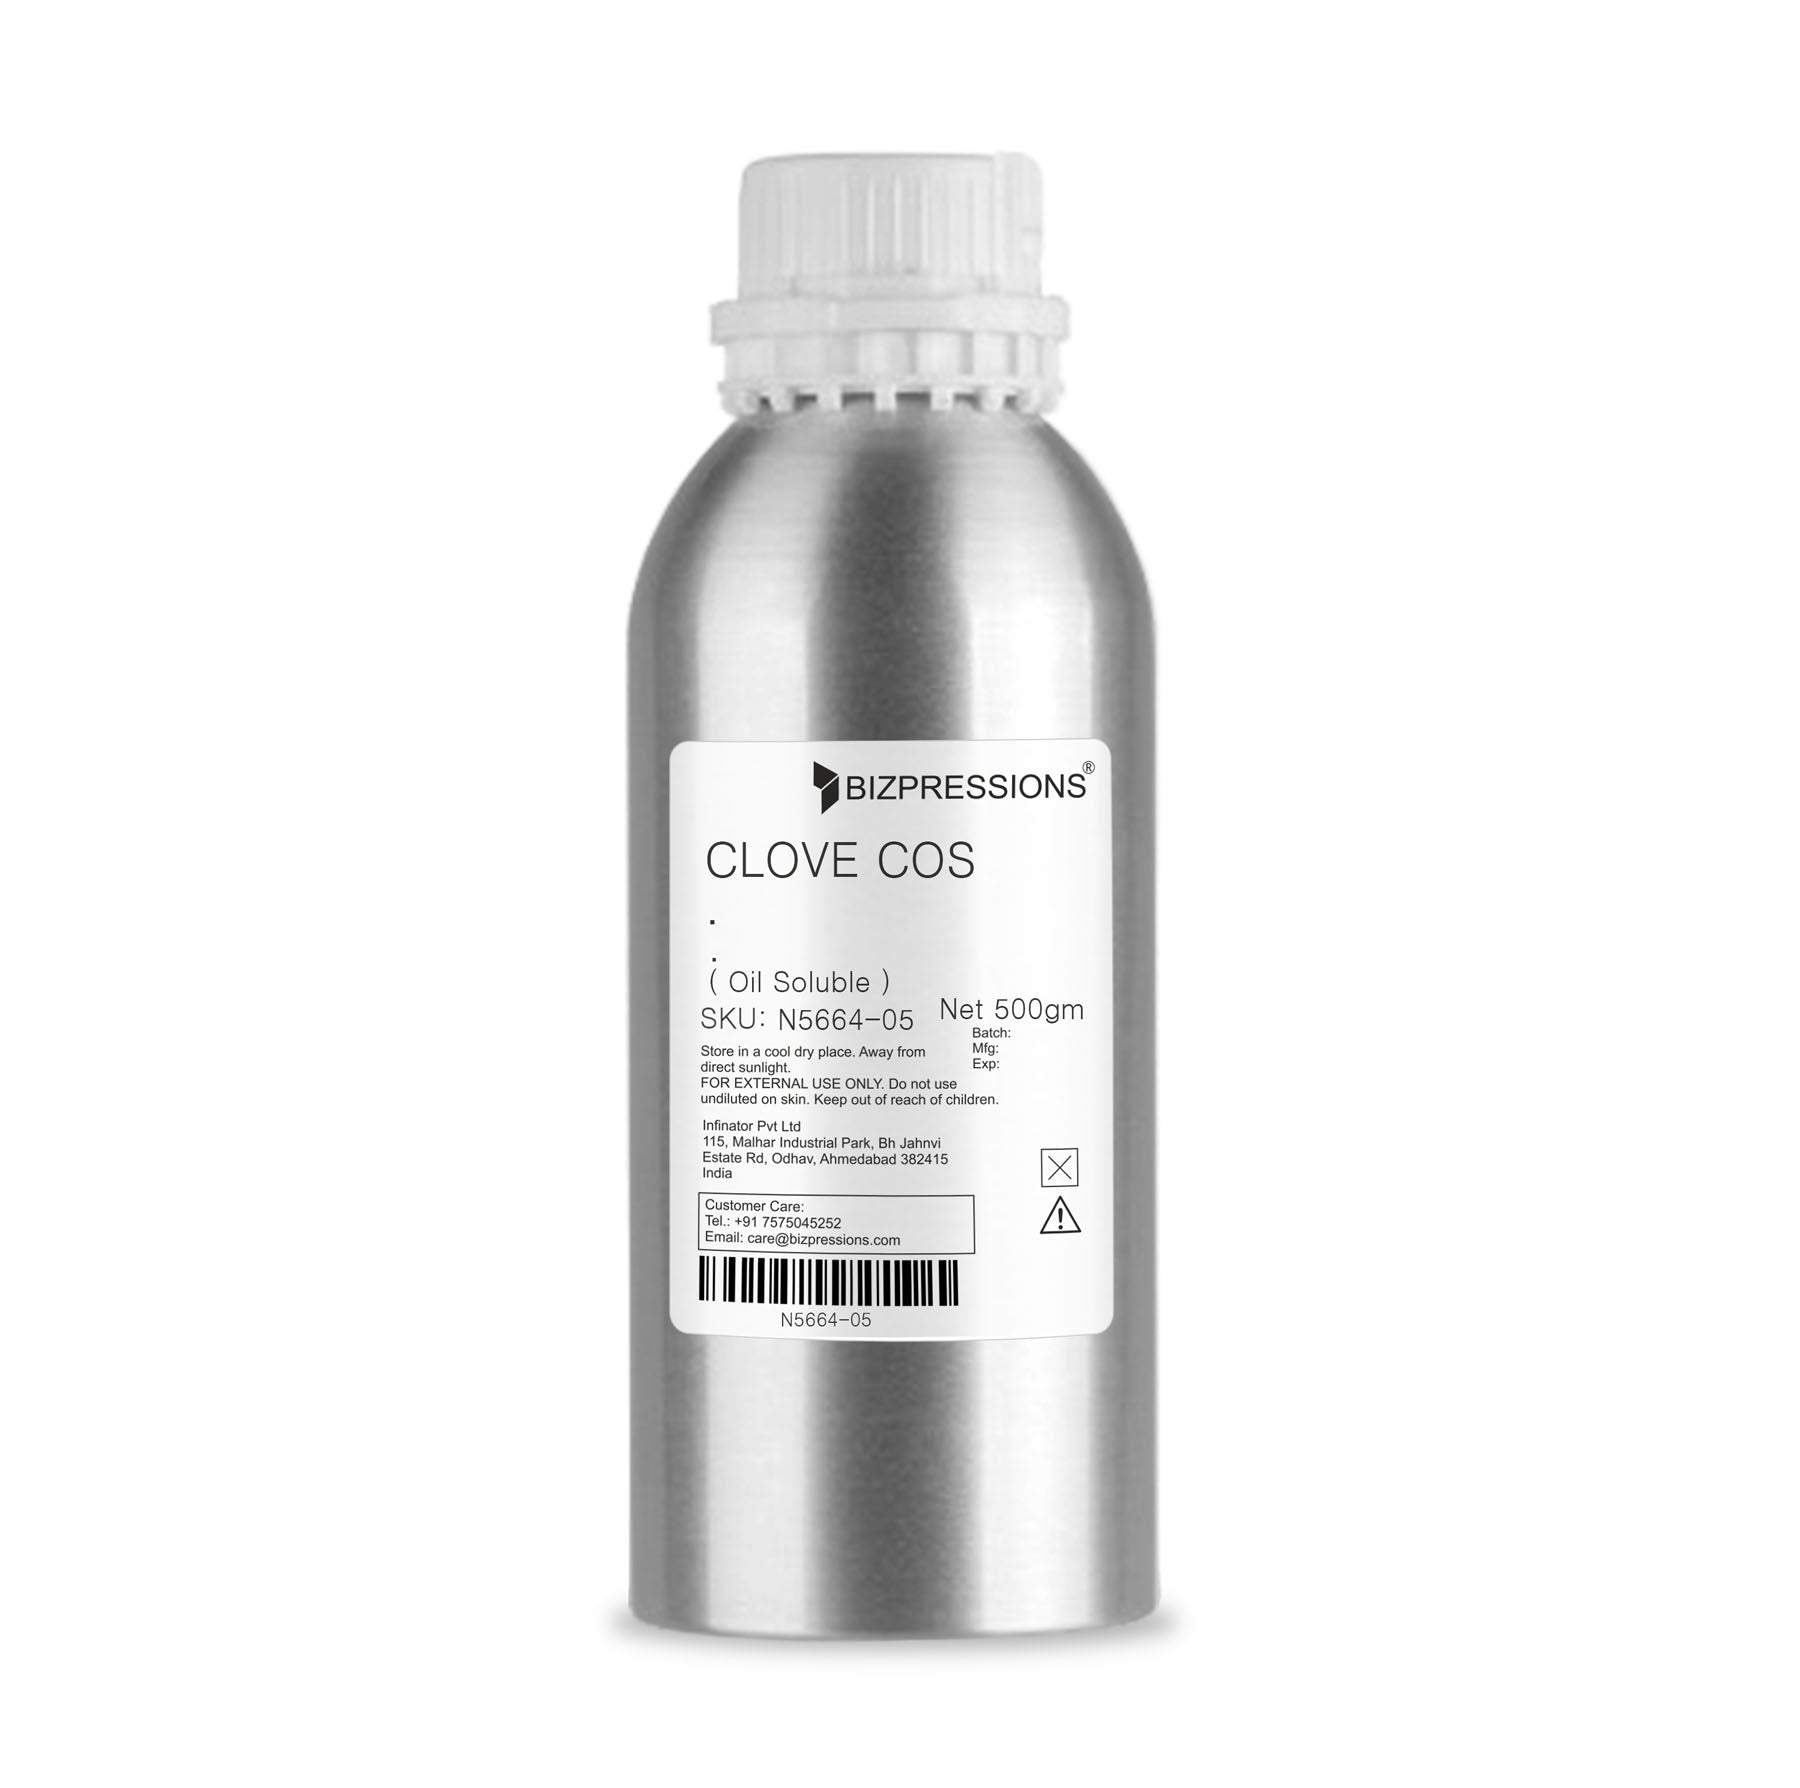 CLOVE COS - Fragrance ( Oil Soluble ) - 500 gm